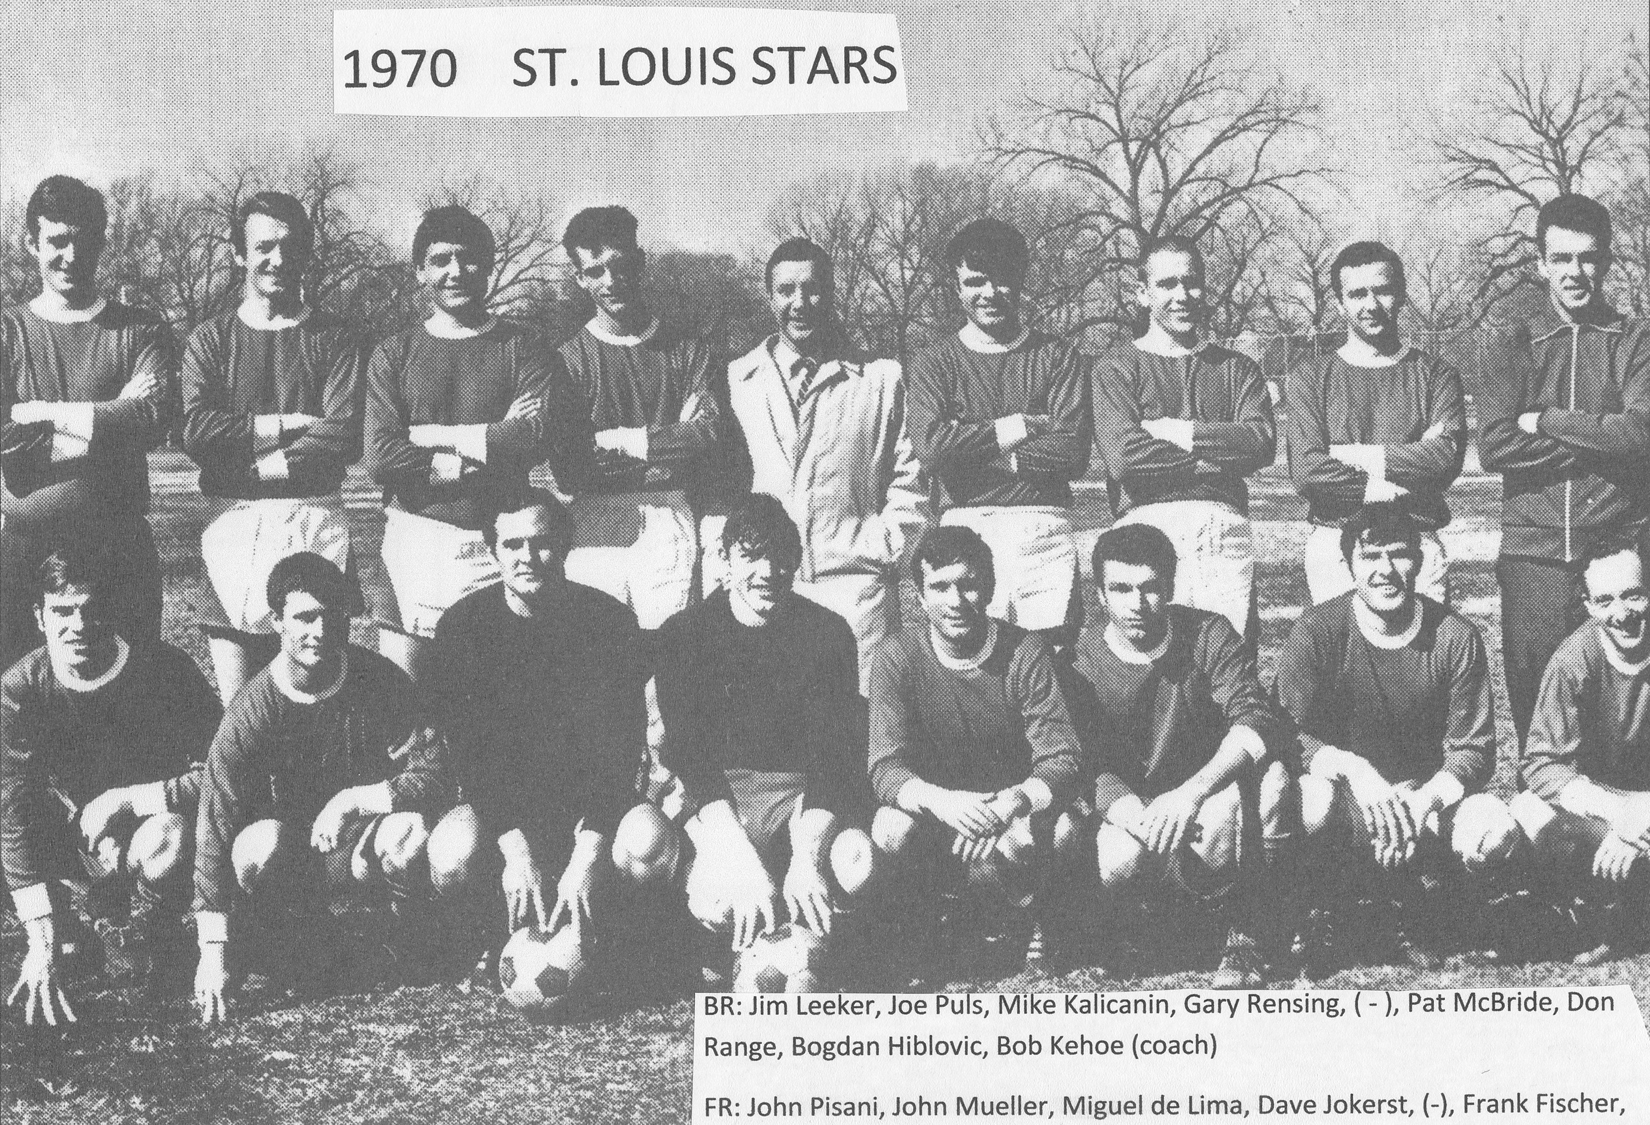 St. Louis Stars - History 